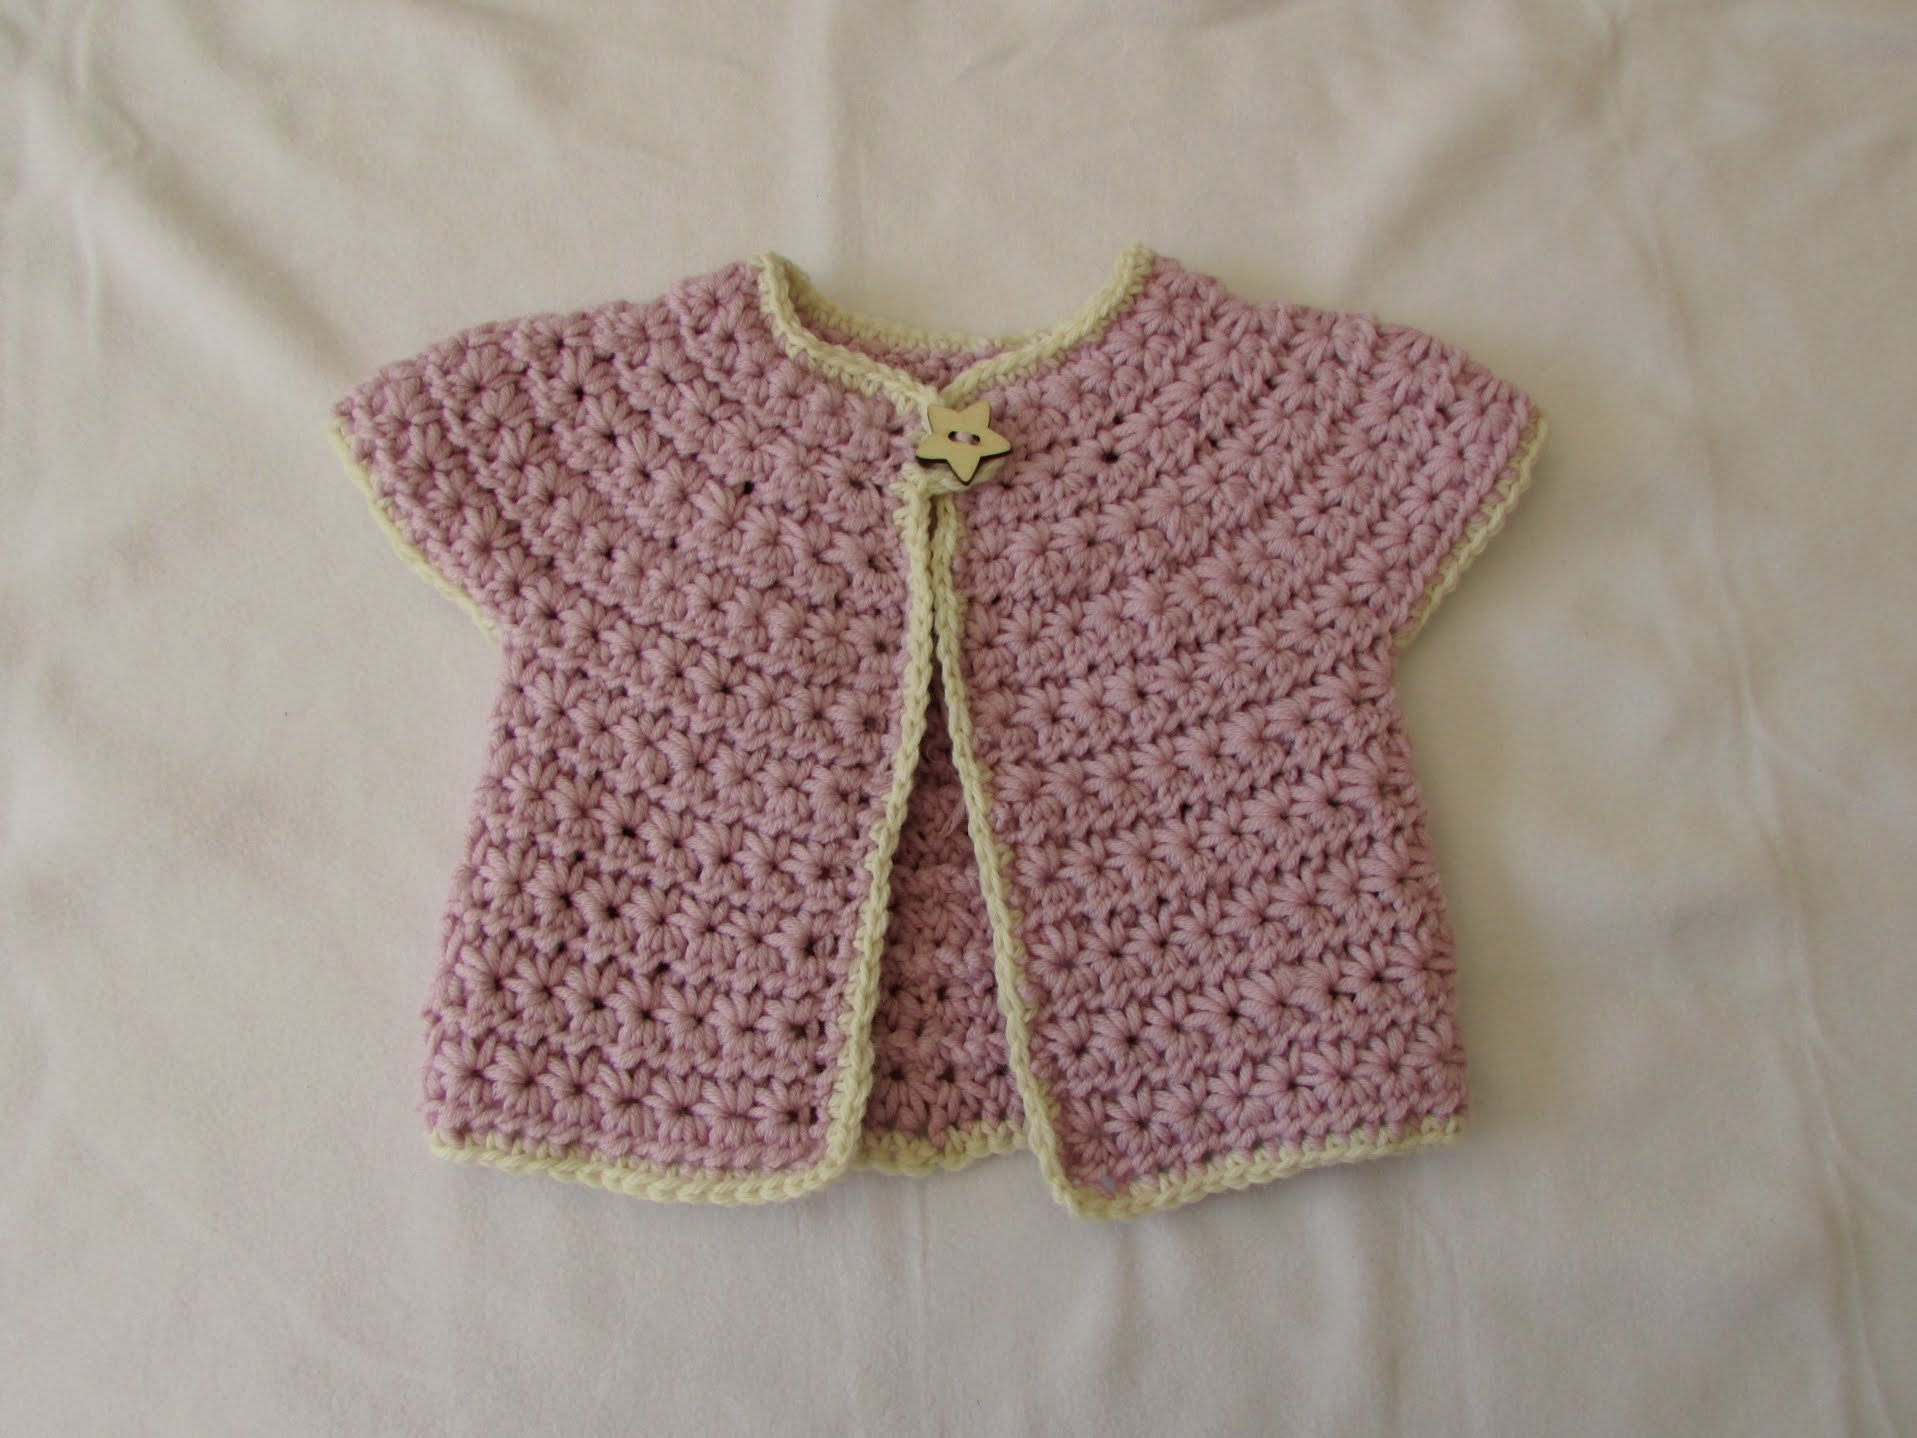 Crochet Newborn Sweater Pattern How To Crochet Ba Sweater Crochet And Knitting Patterns 2019